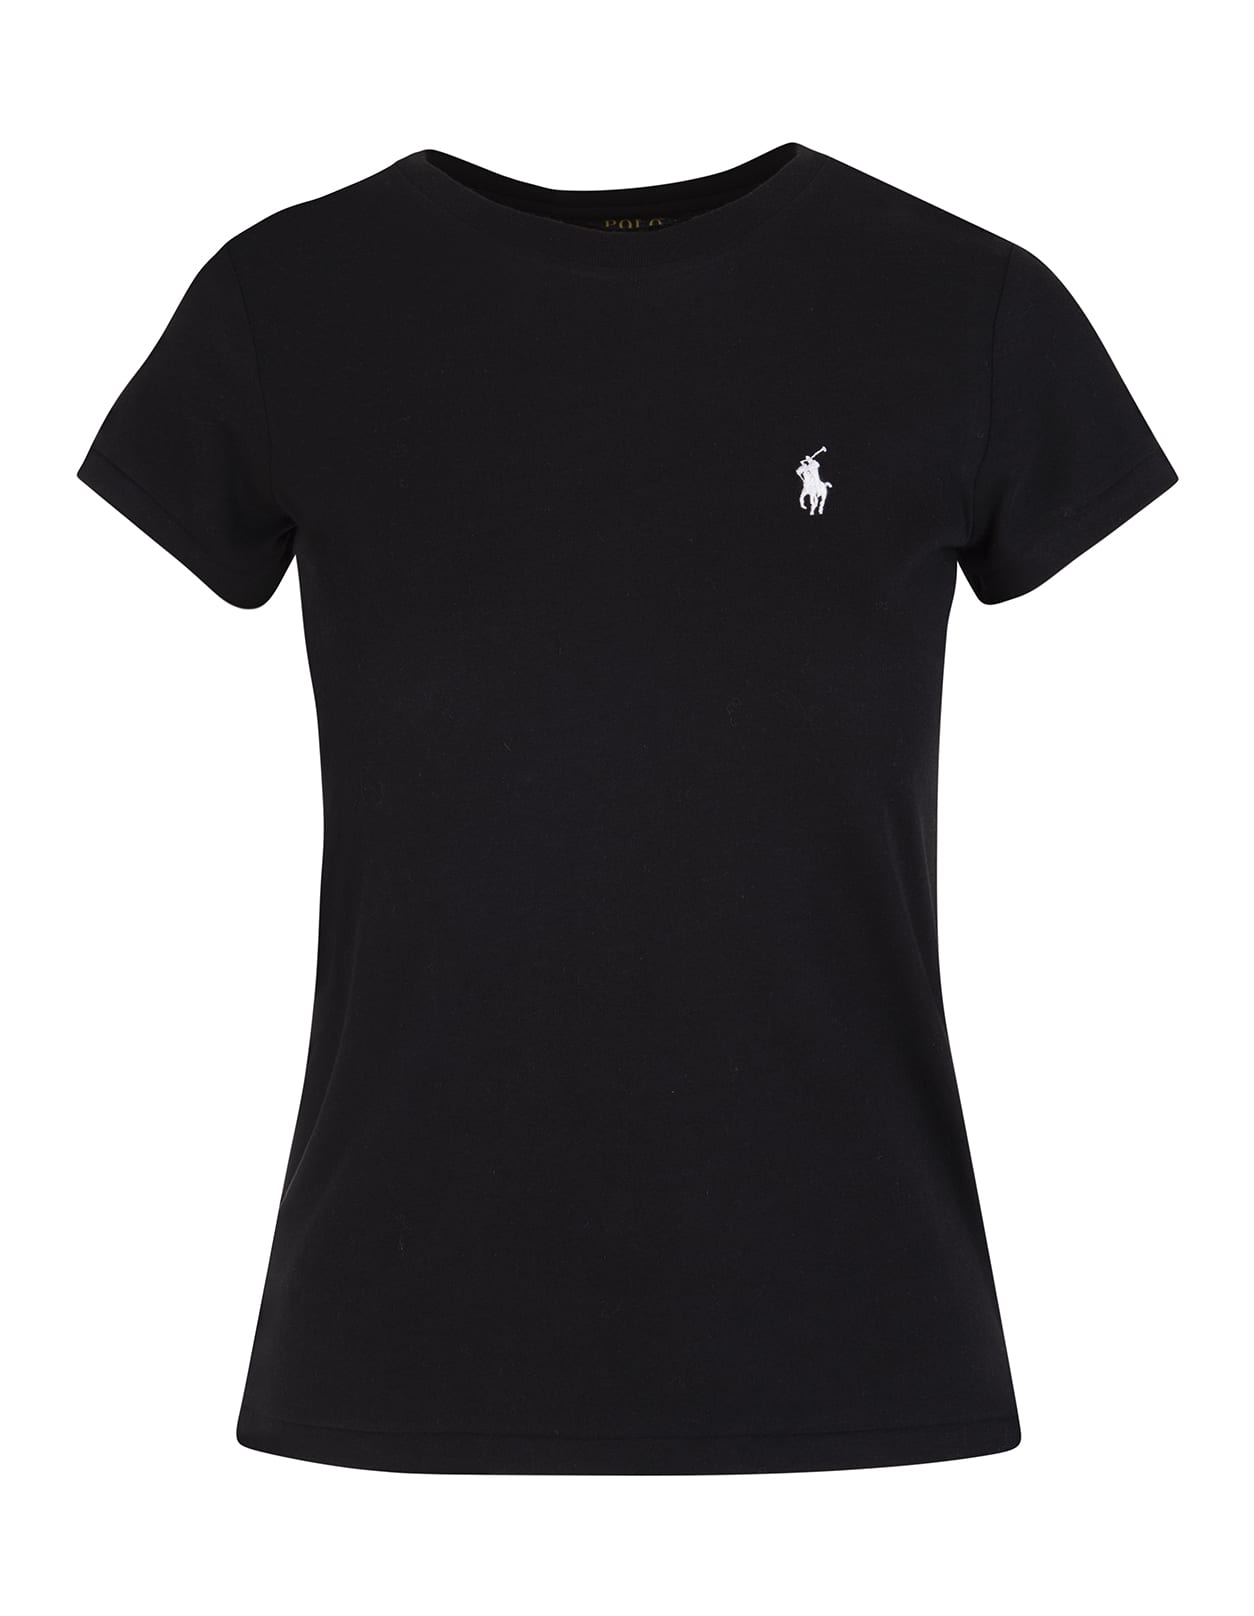 Ralph Lauren Woman Basic Black T-shirt With White Pony